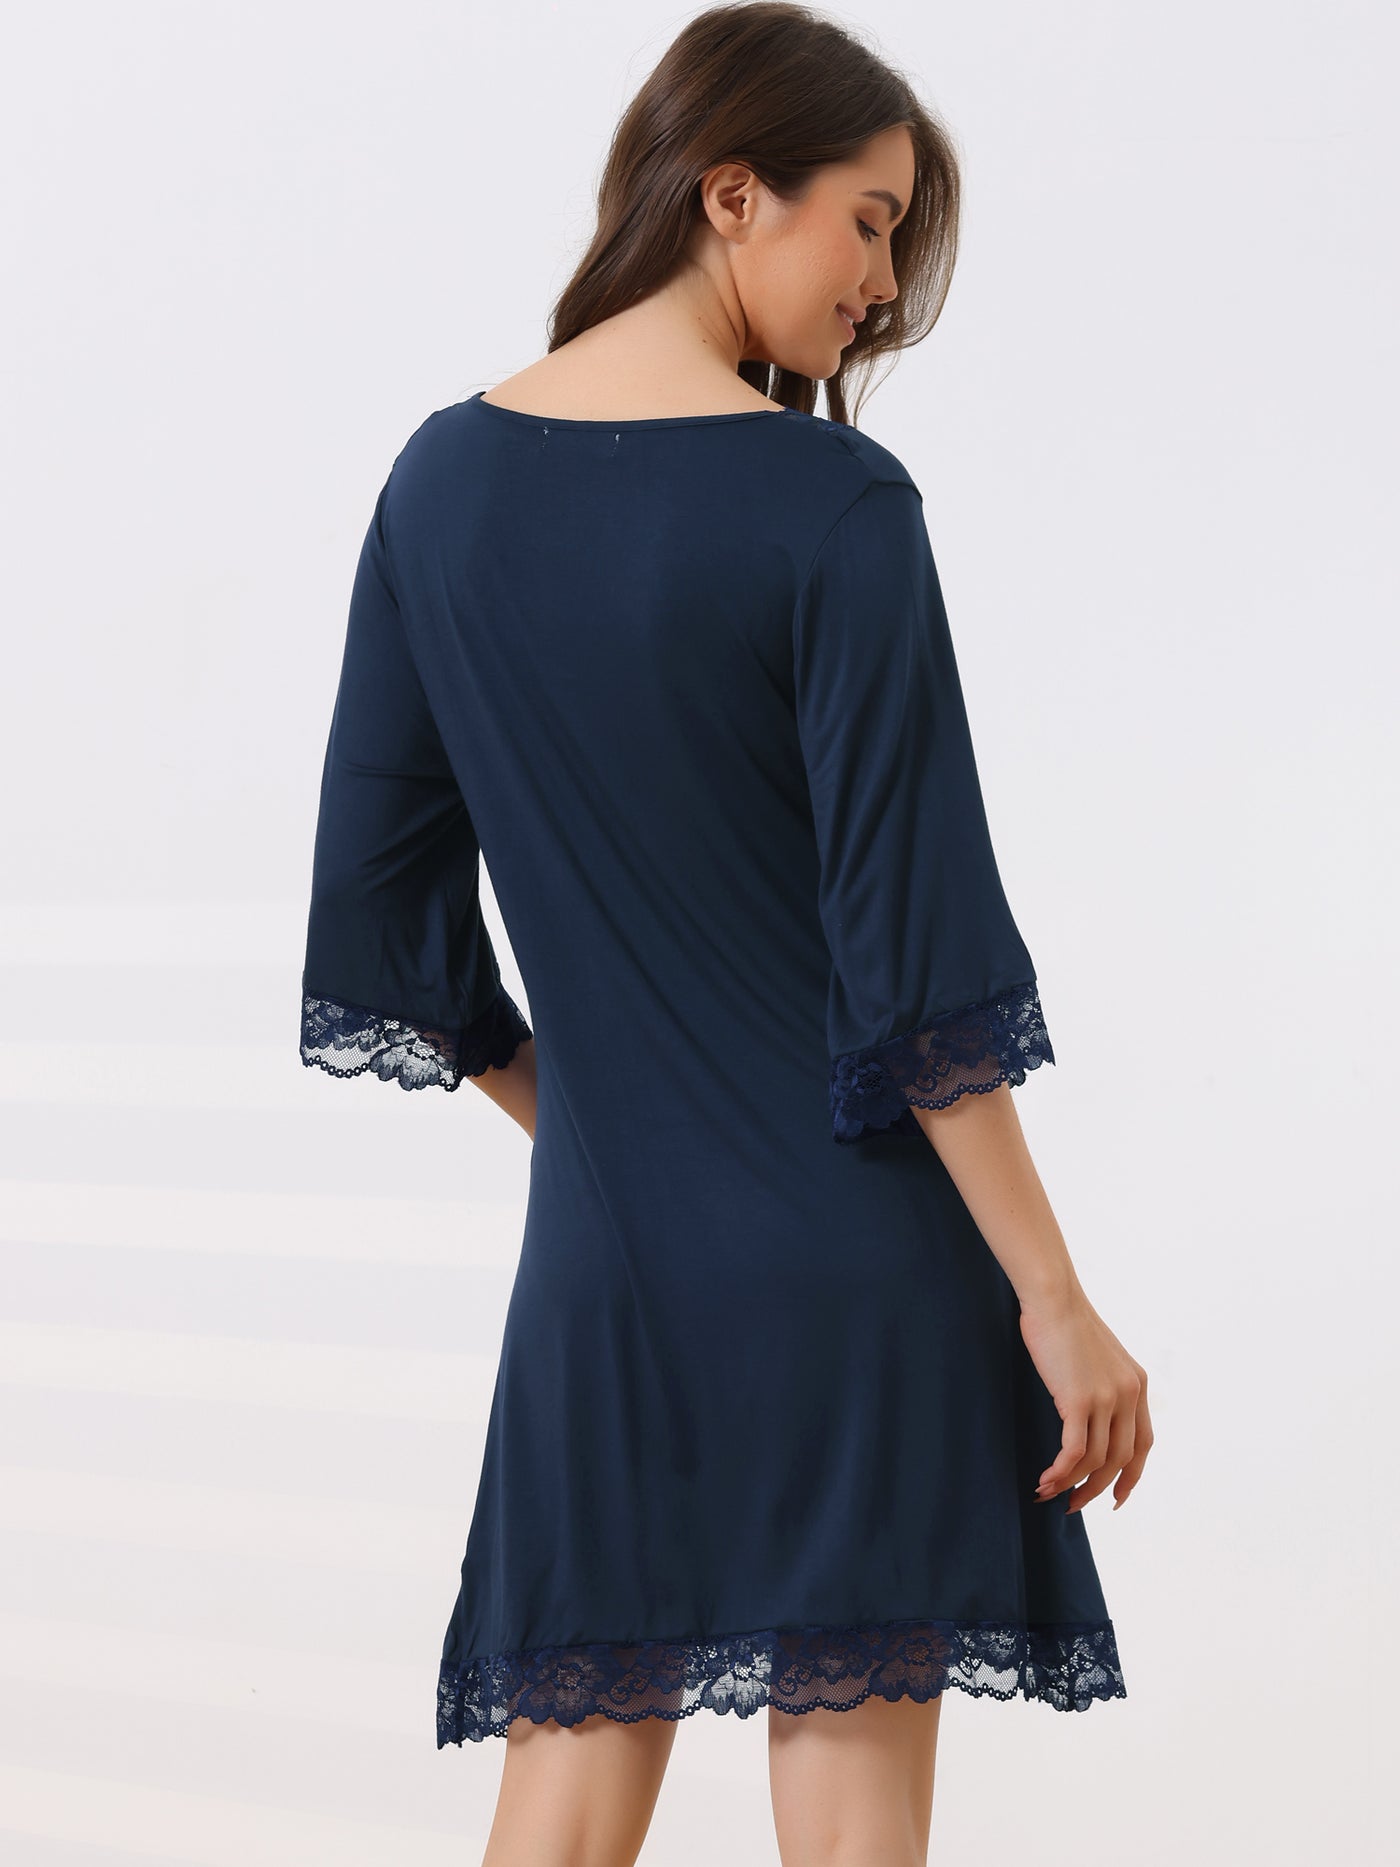 Bublédon Womens Lace Nightshirt Soft Half Sleeve Sleepshirt Loungewear Pajama Nightgown